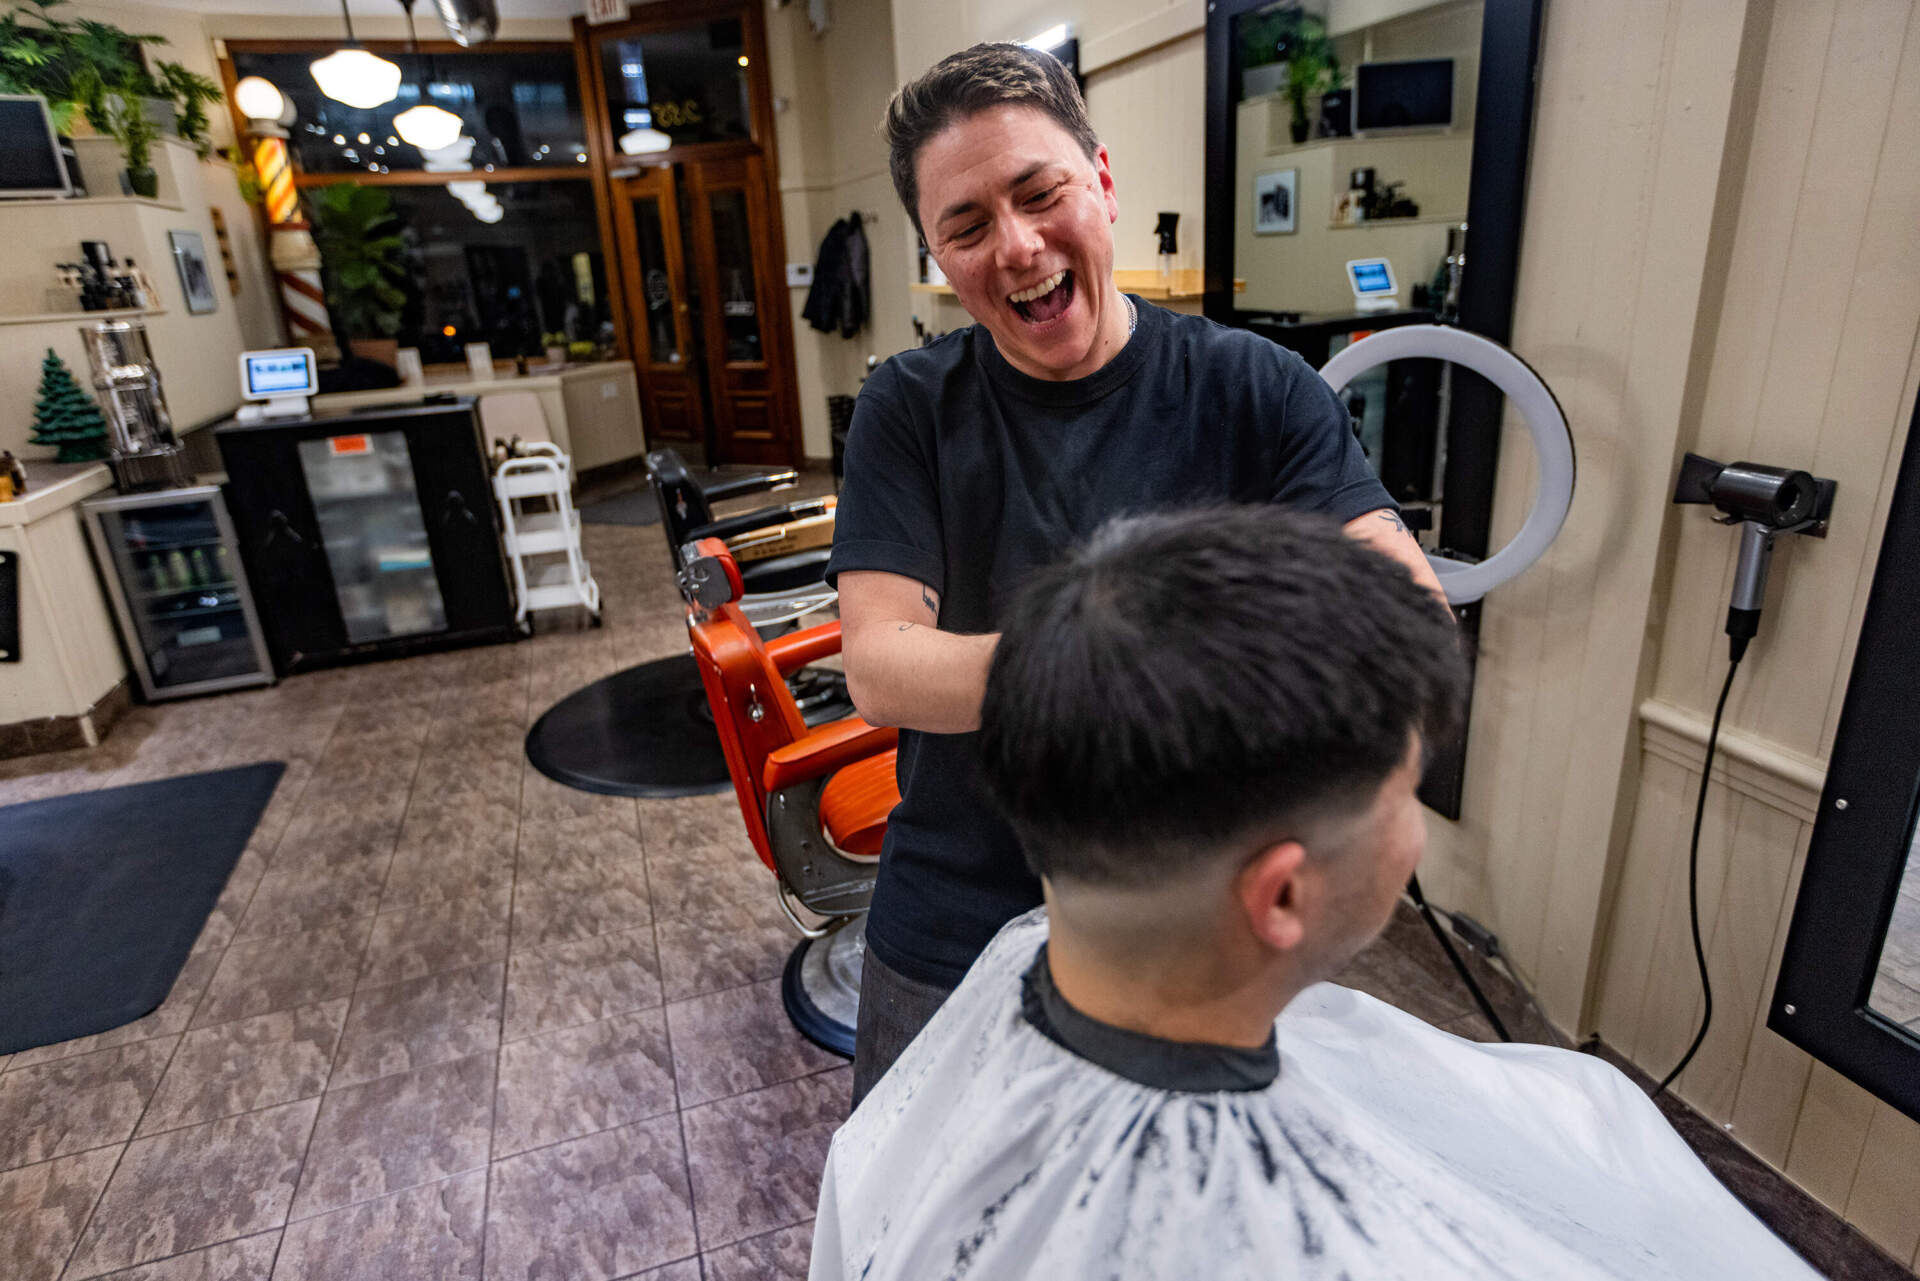 M Arida gets to work cutting Aaron Chiou's hair. (Jesse Costa/WBUR)